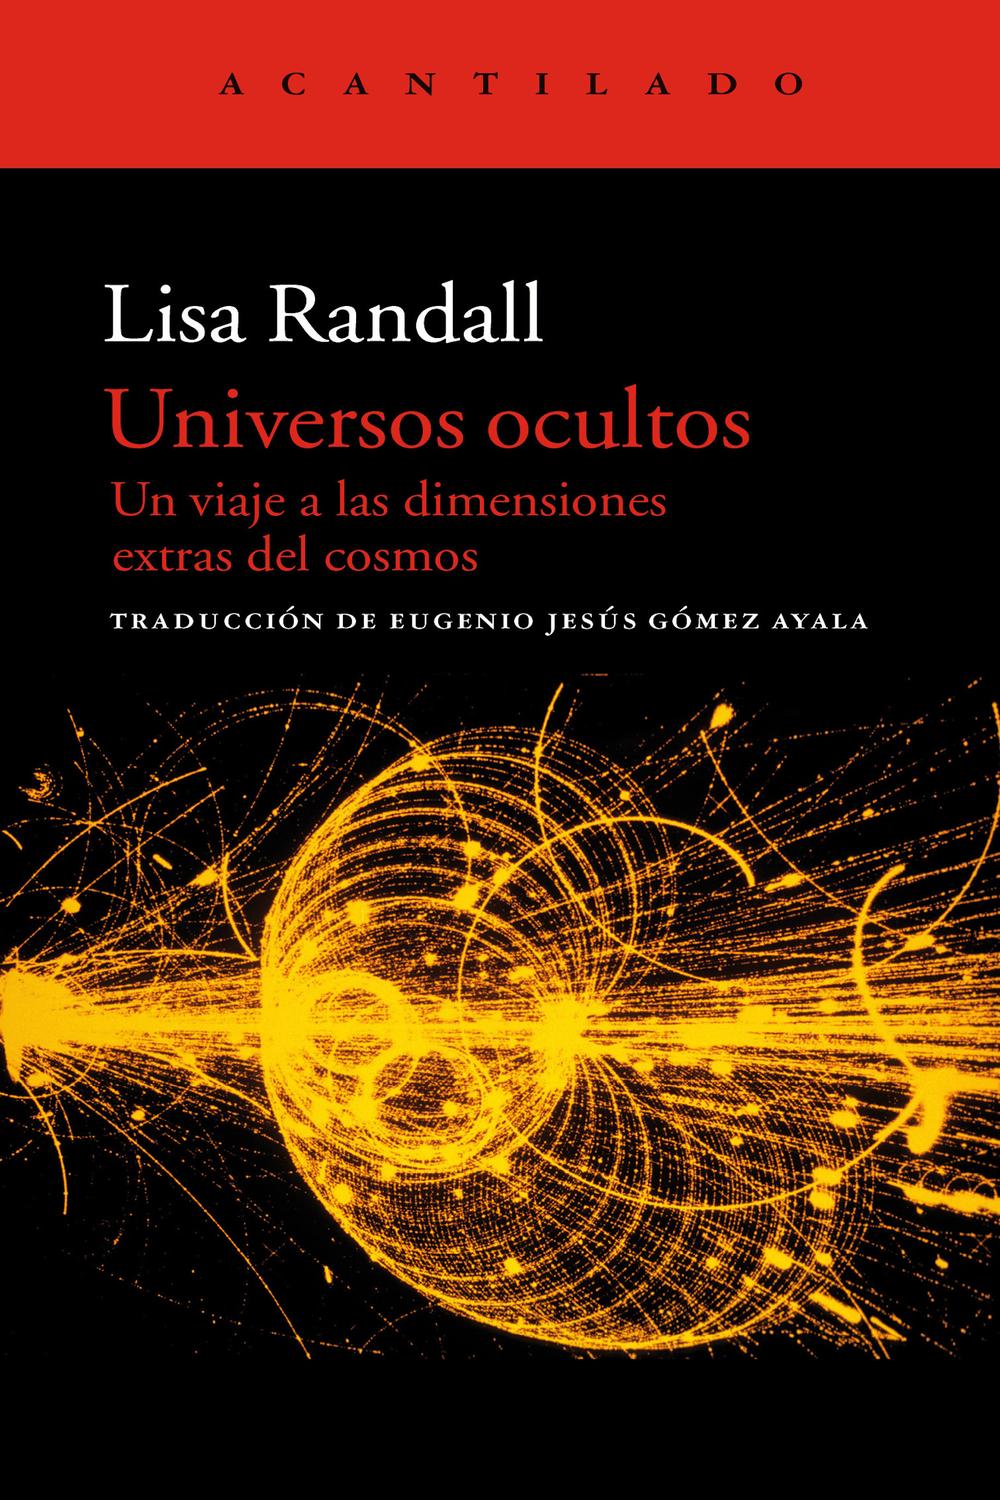 Universos ocultos - Lisa Randall, Eugenio Jesús Gómez Ayala